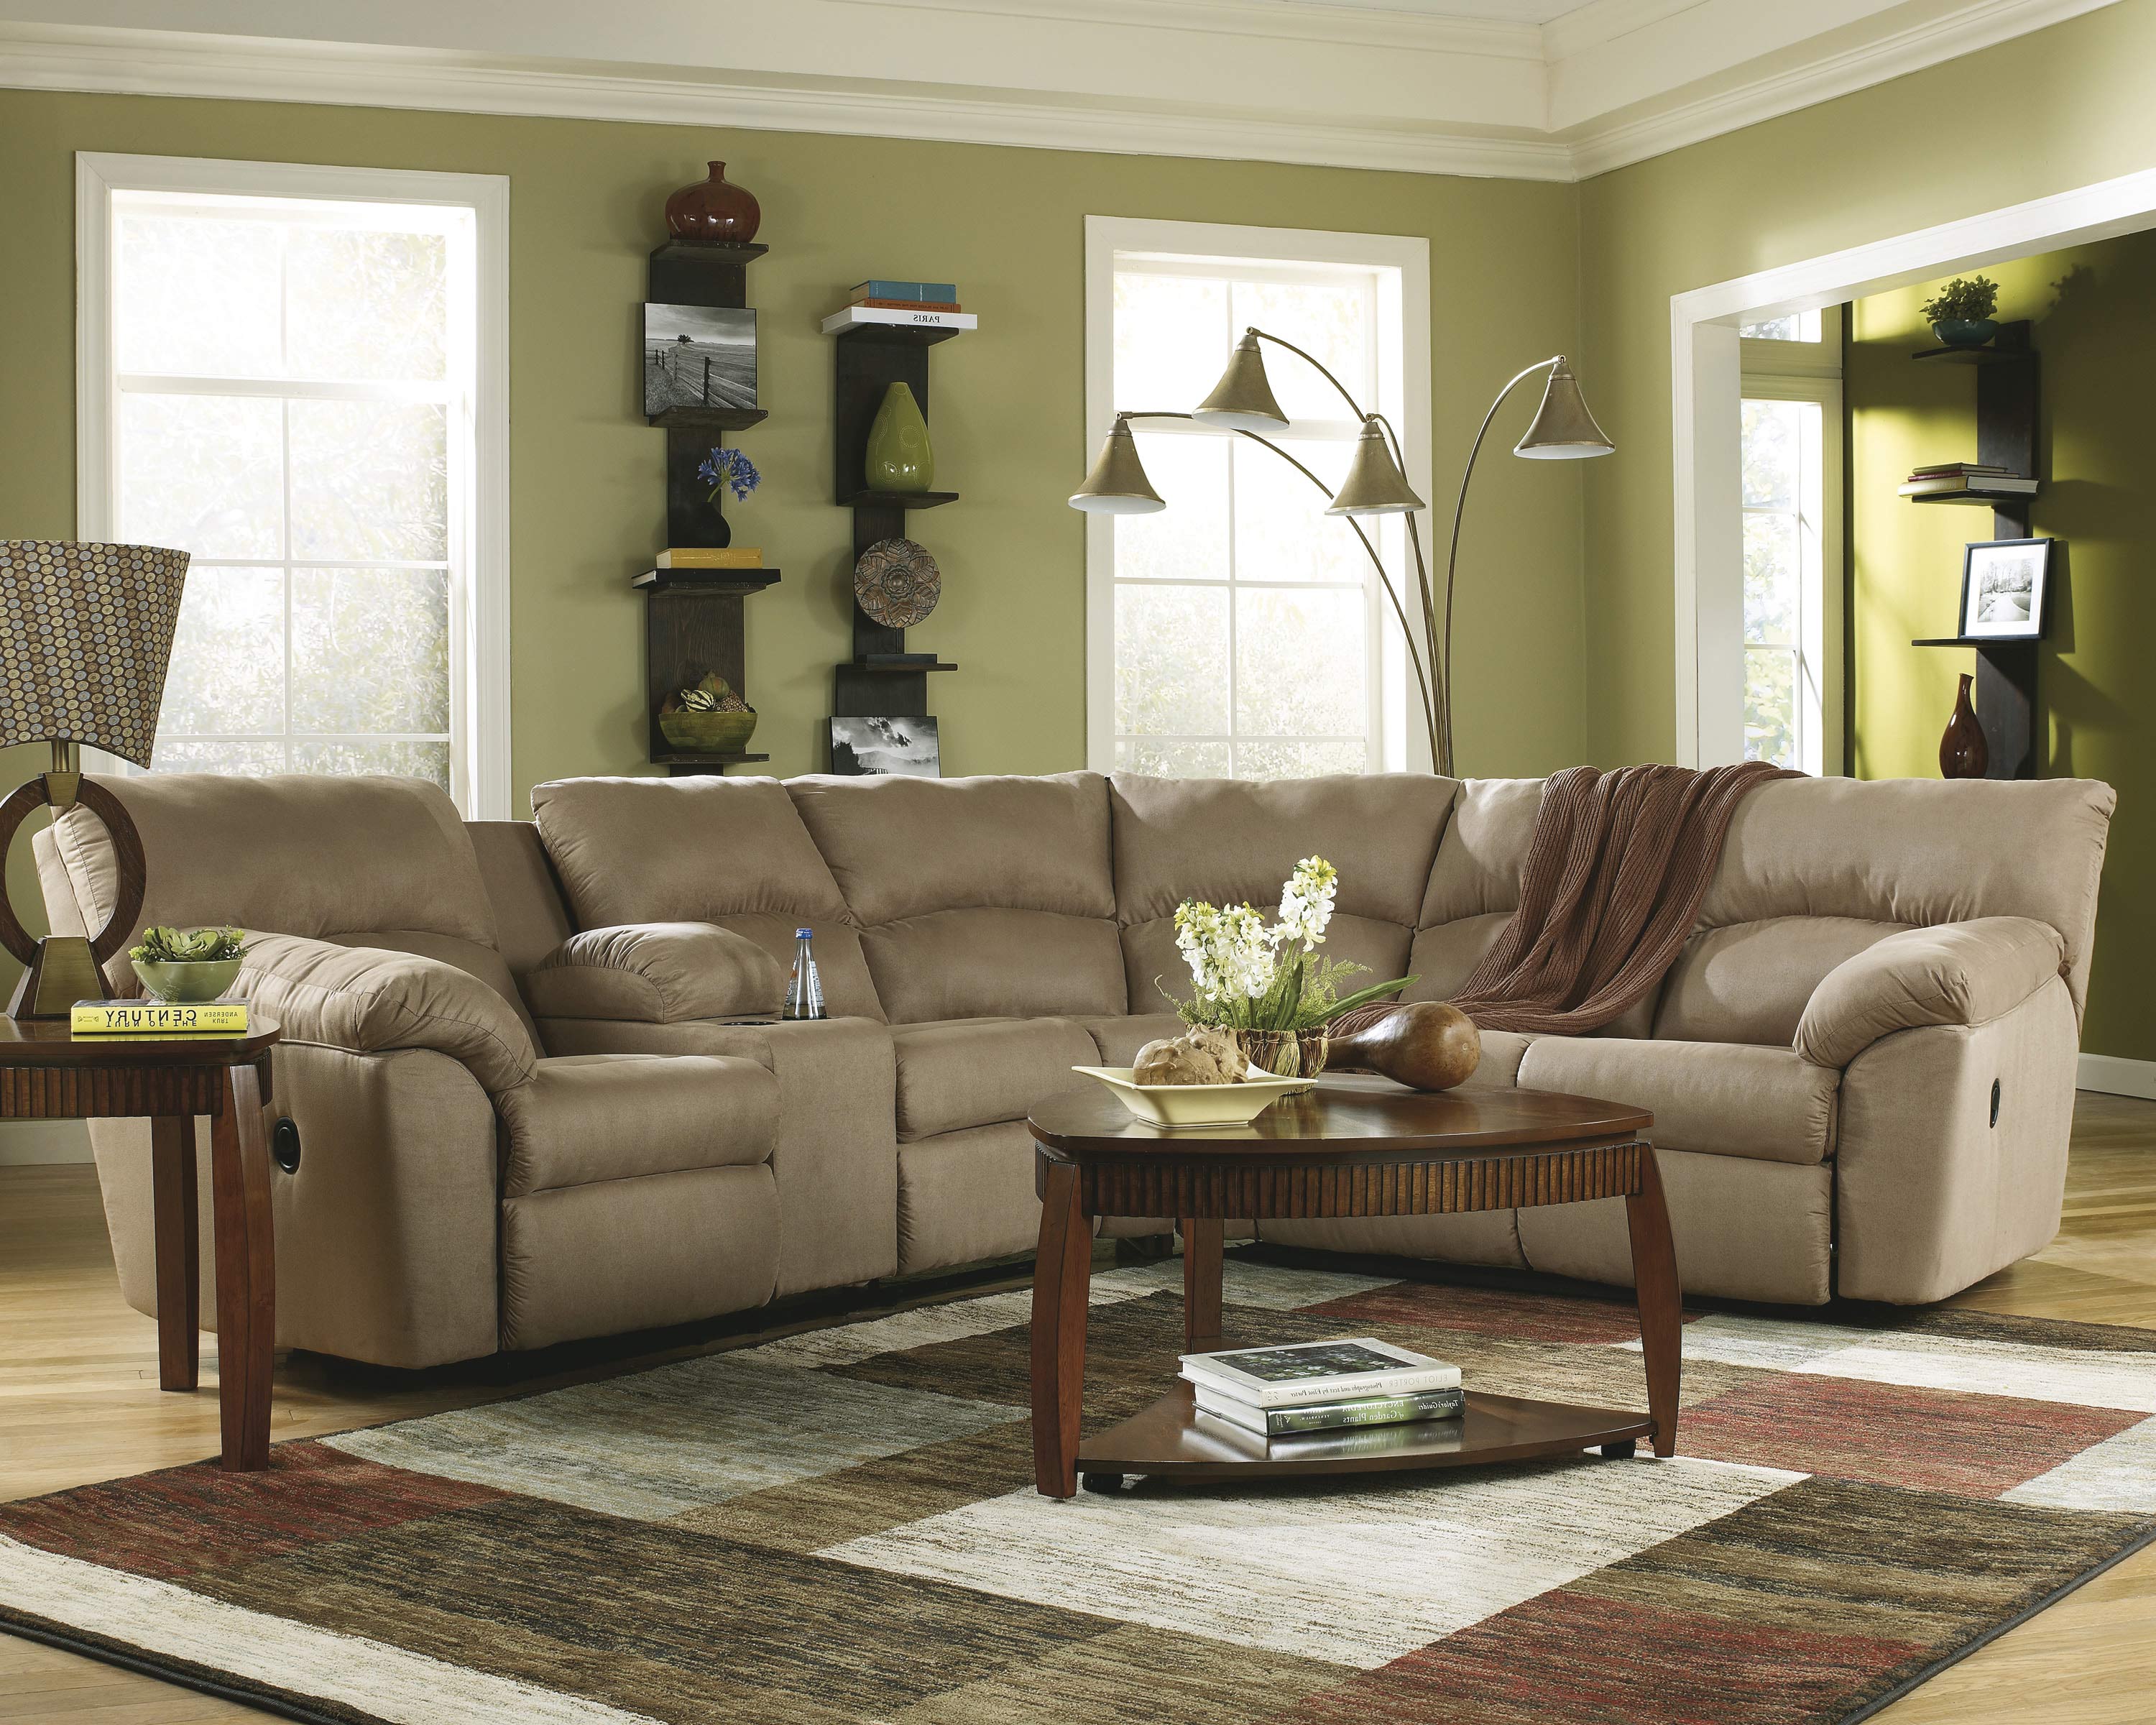 living room furniture catalogue pdf